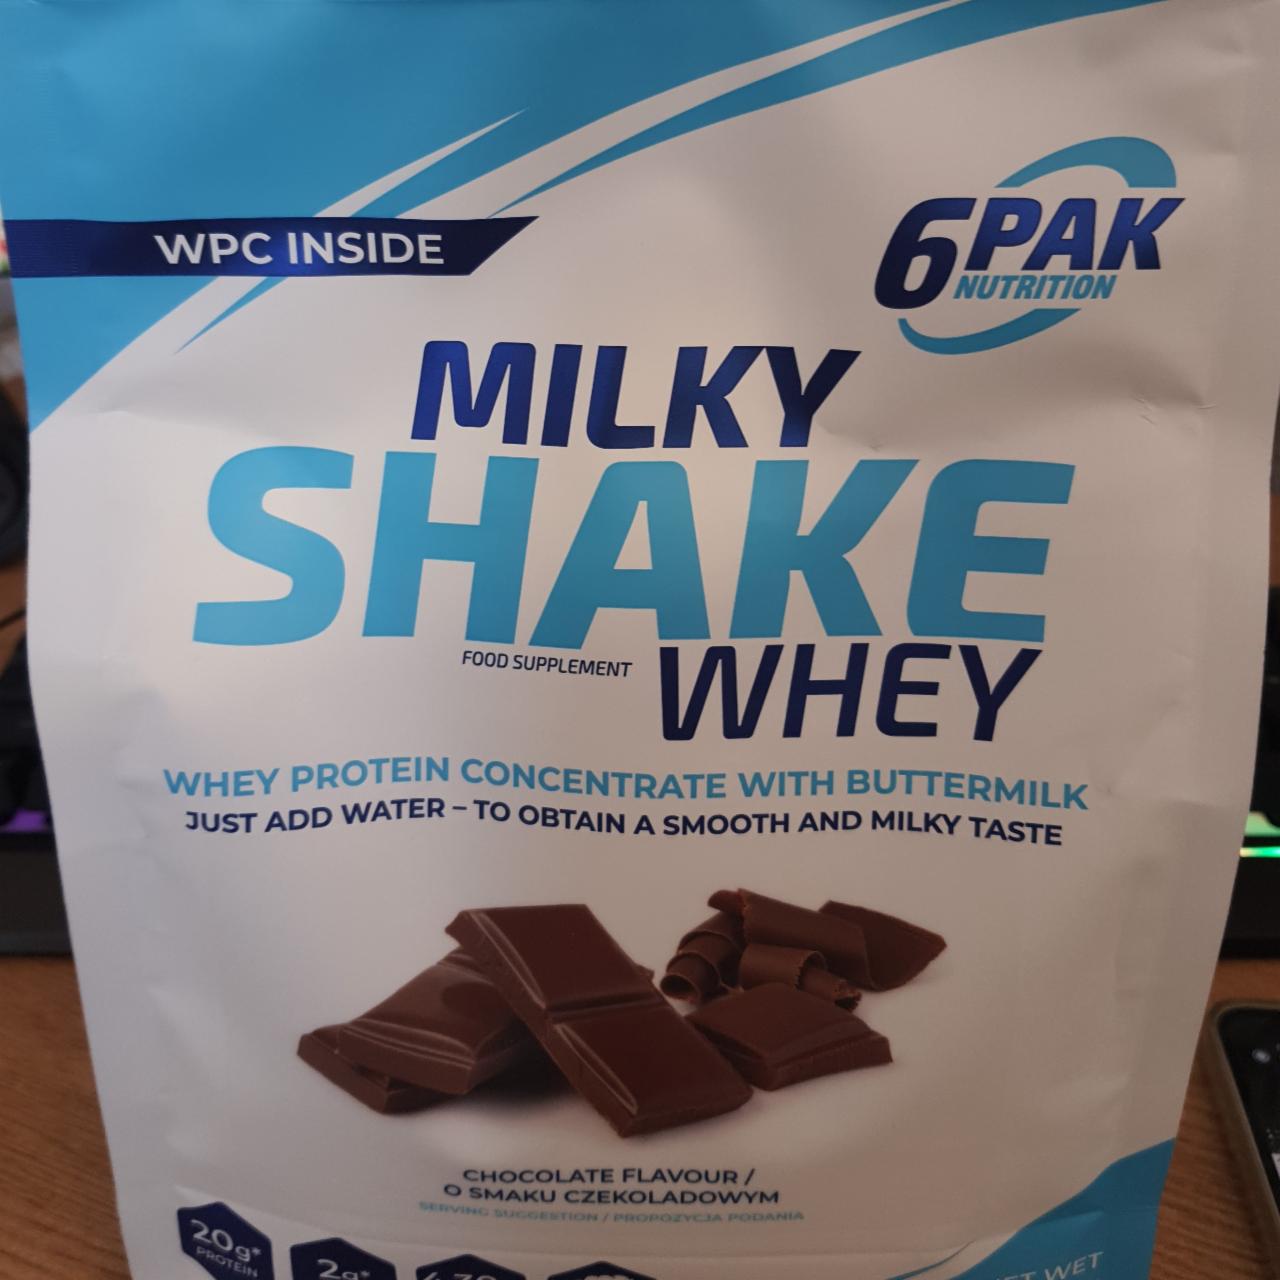 Фото - Протеин шоколад Milky Shake Whey Czekolada 6PAK Nutrition